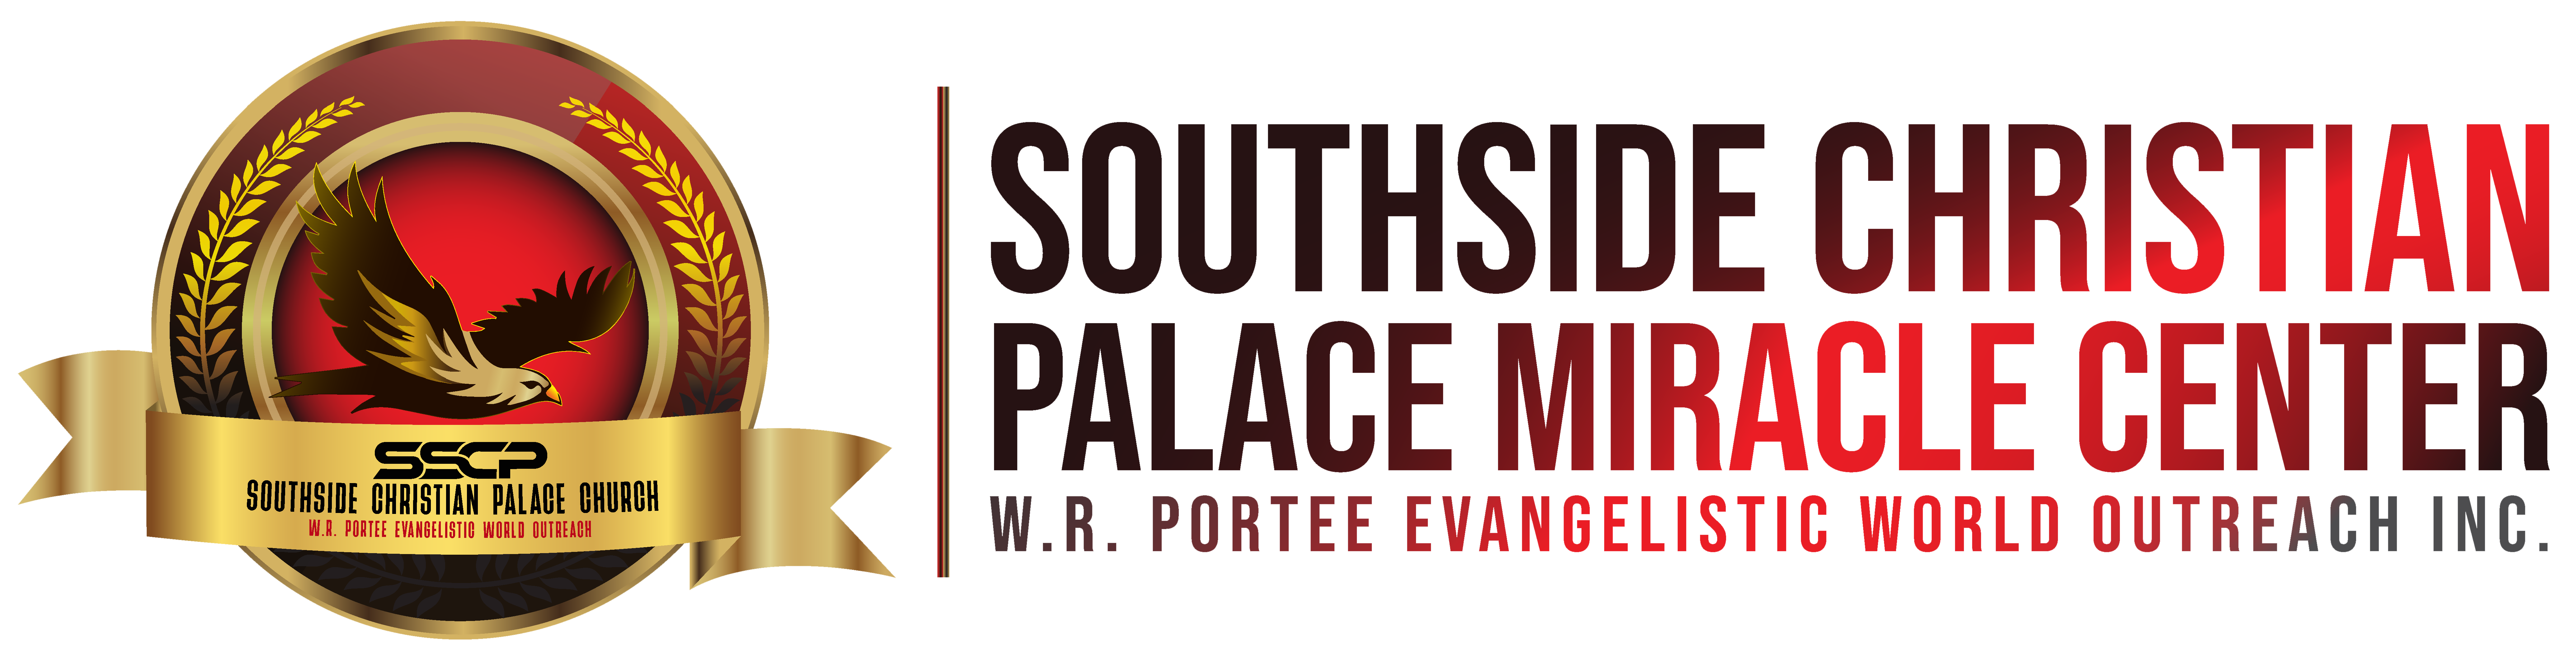 Southside Christian Palace Church